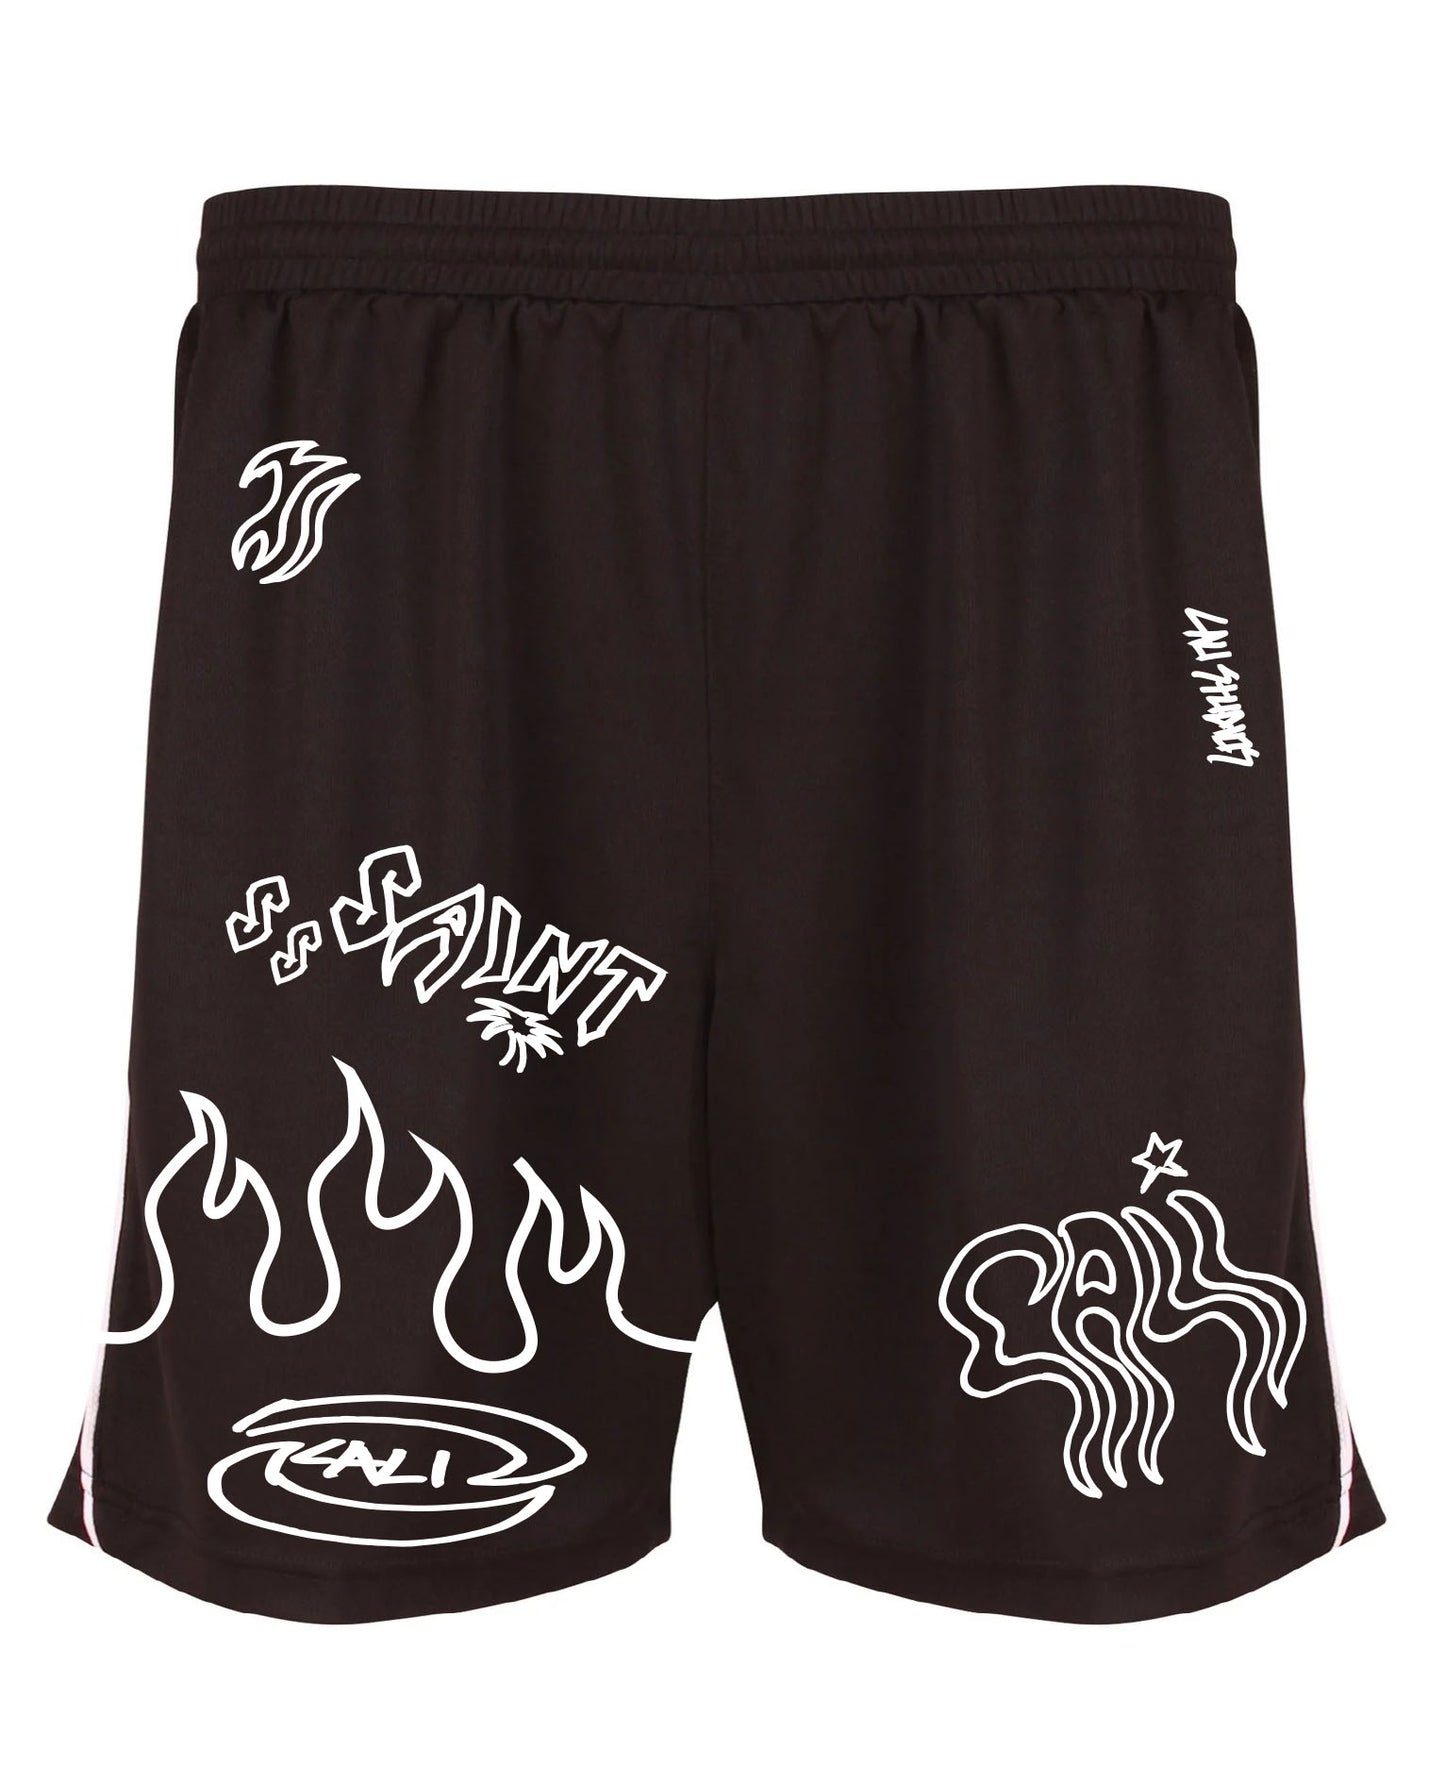 Doodle Mesh Shorts - Black